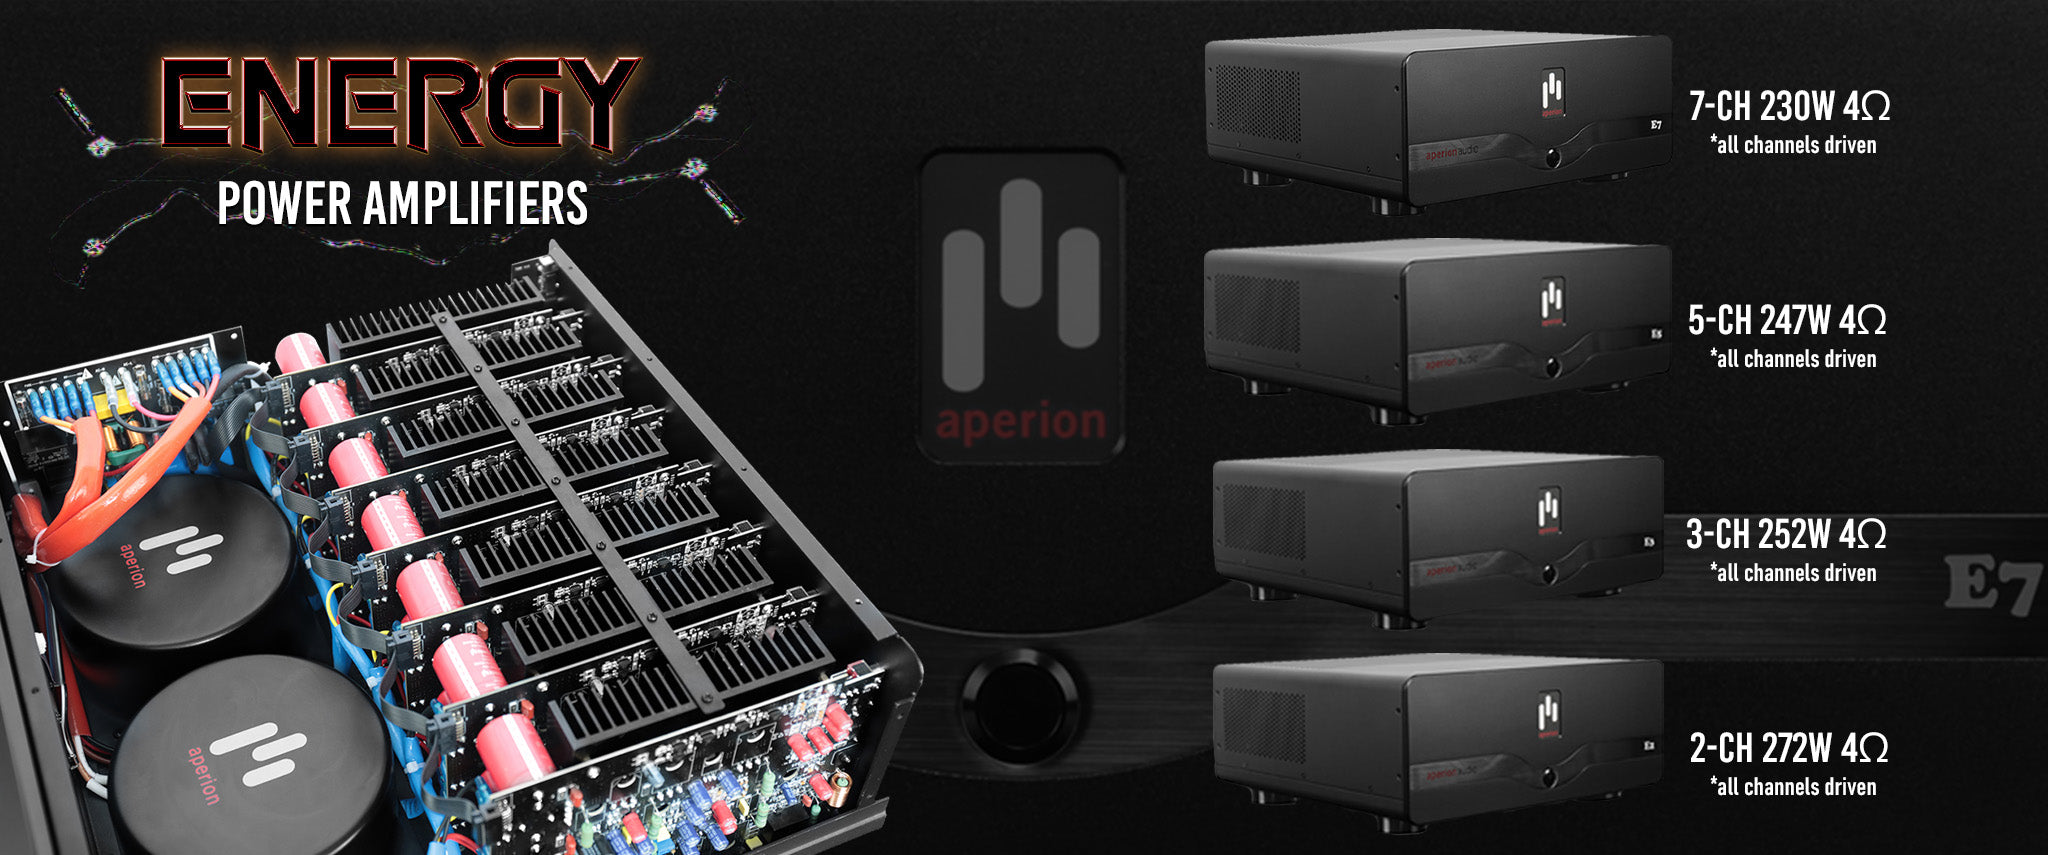 Pardon Zielig Snelkoppelingen Aperion Audio | Best Home Theater Surround Sound Stereo Speaker System